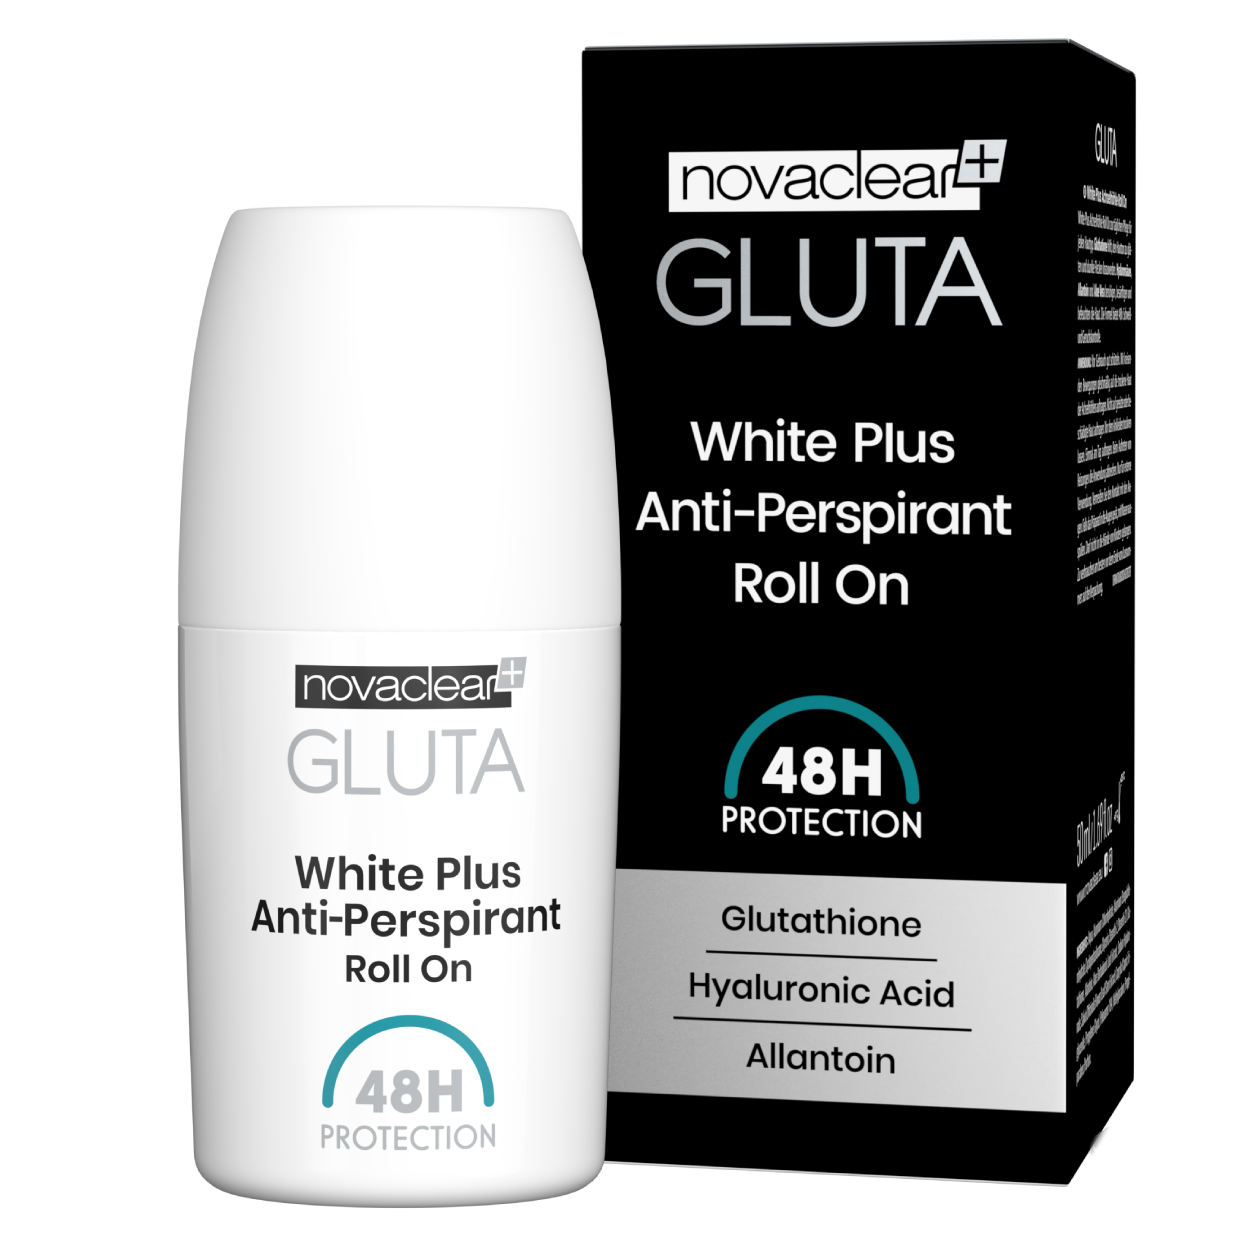 novaclear-gluta-white-plus-anti-perspirant-roll-on